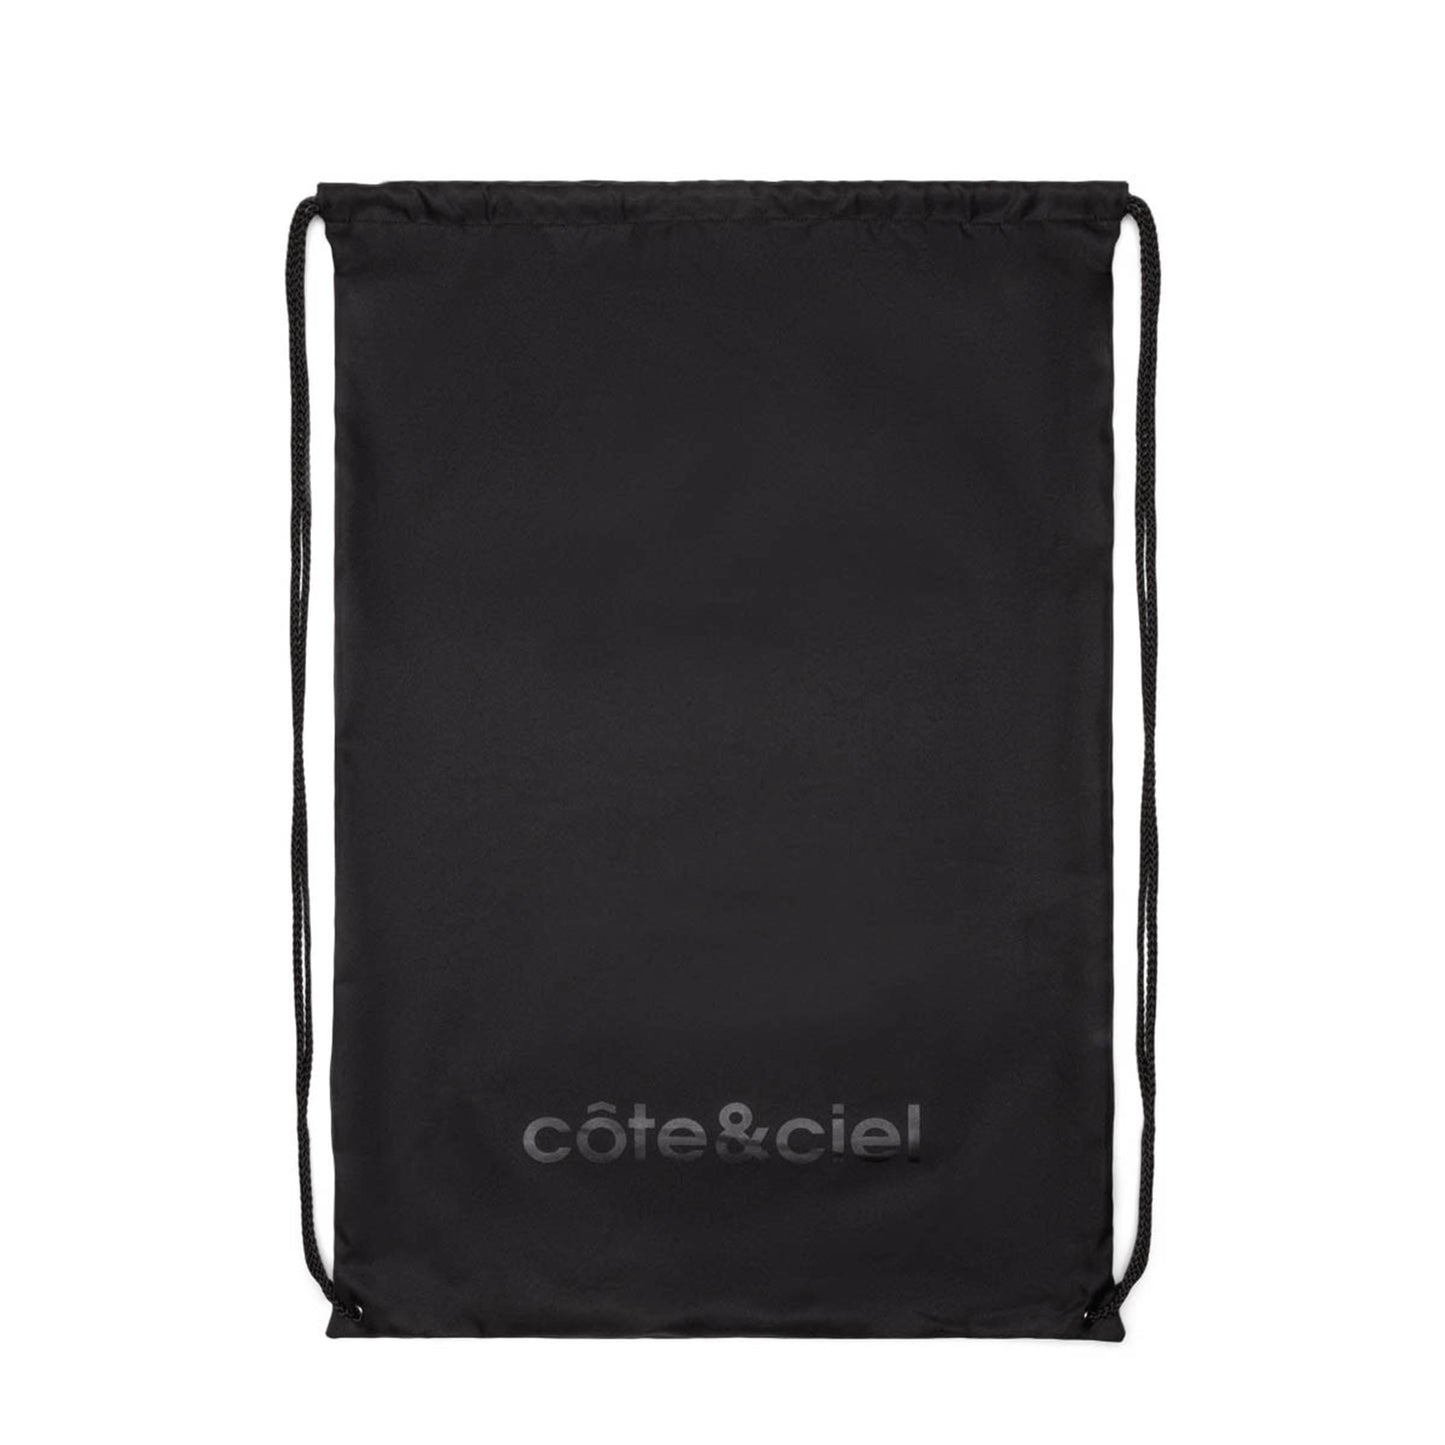 Côte&Ciel Bags BLACK / O/S ISAR MEDIUM ECOYARN